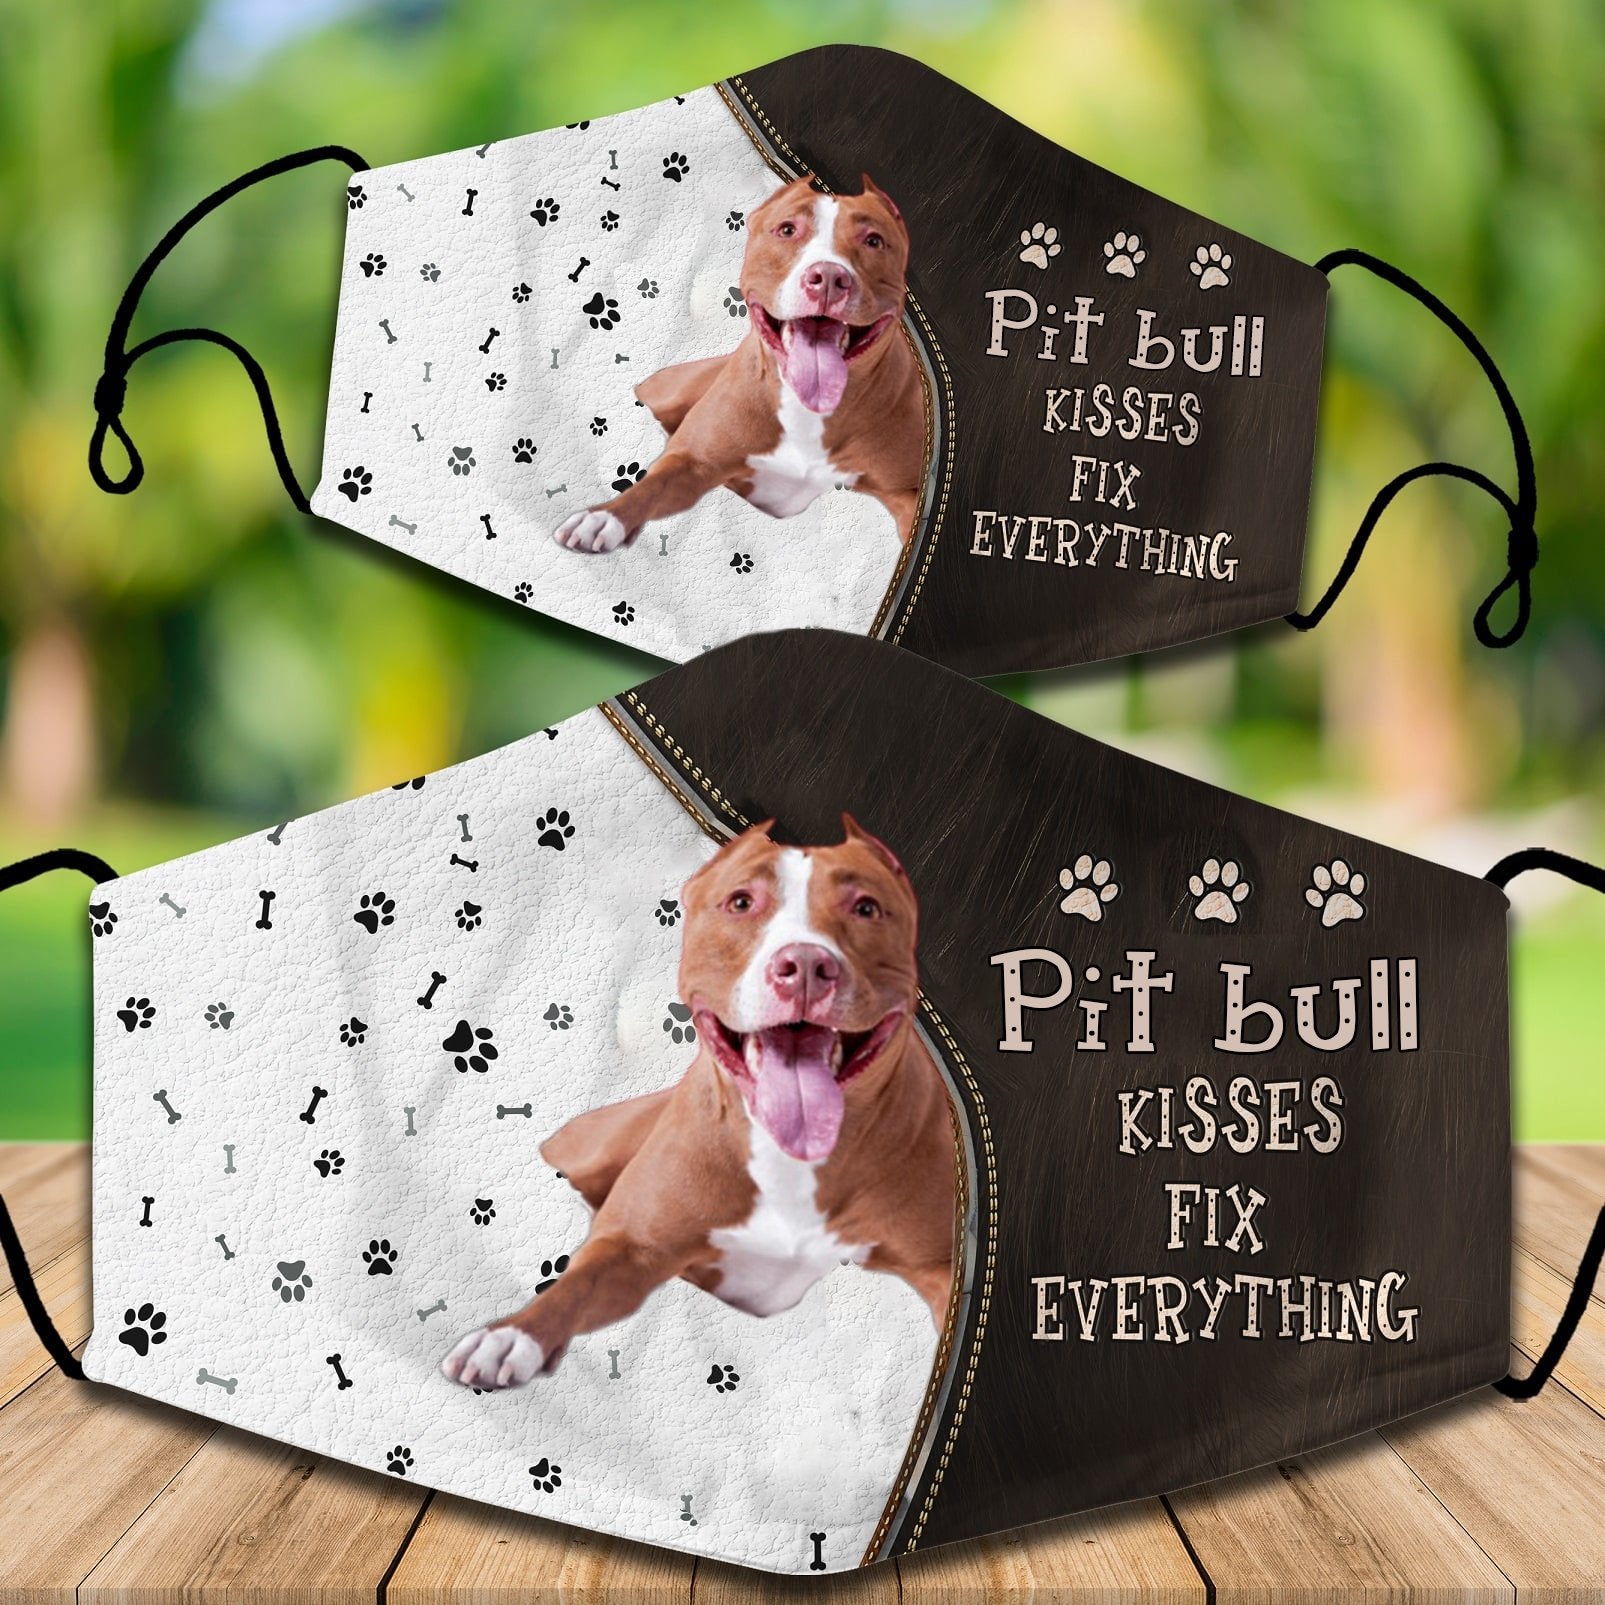 Pit bull2 Kisses Fix Everything Veil